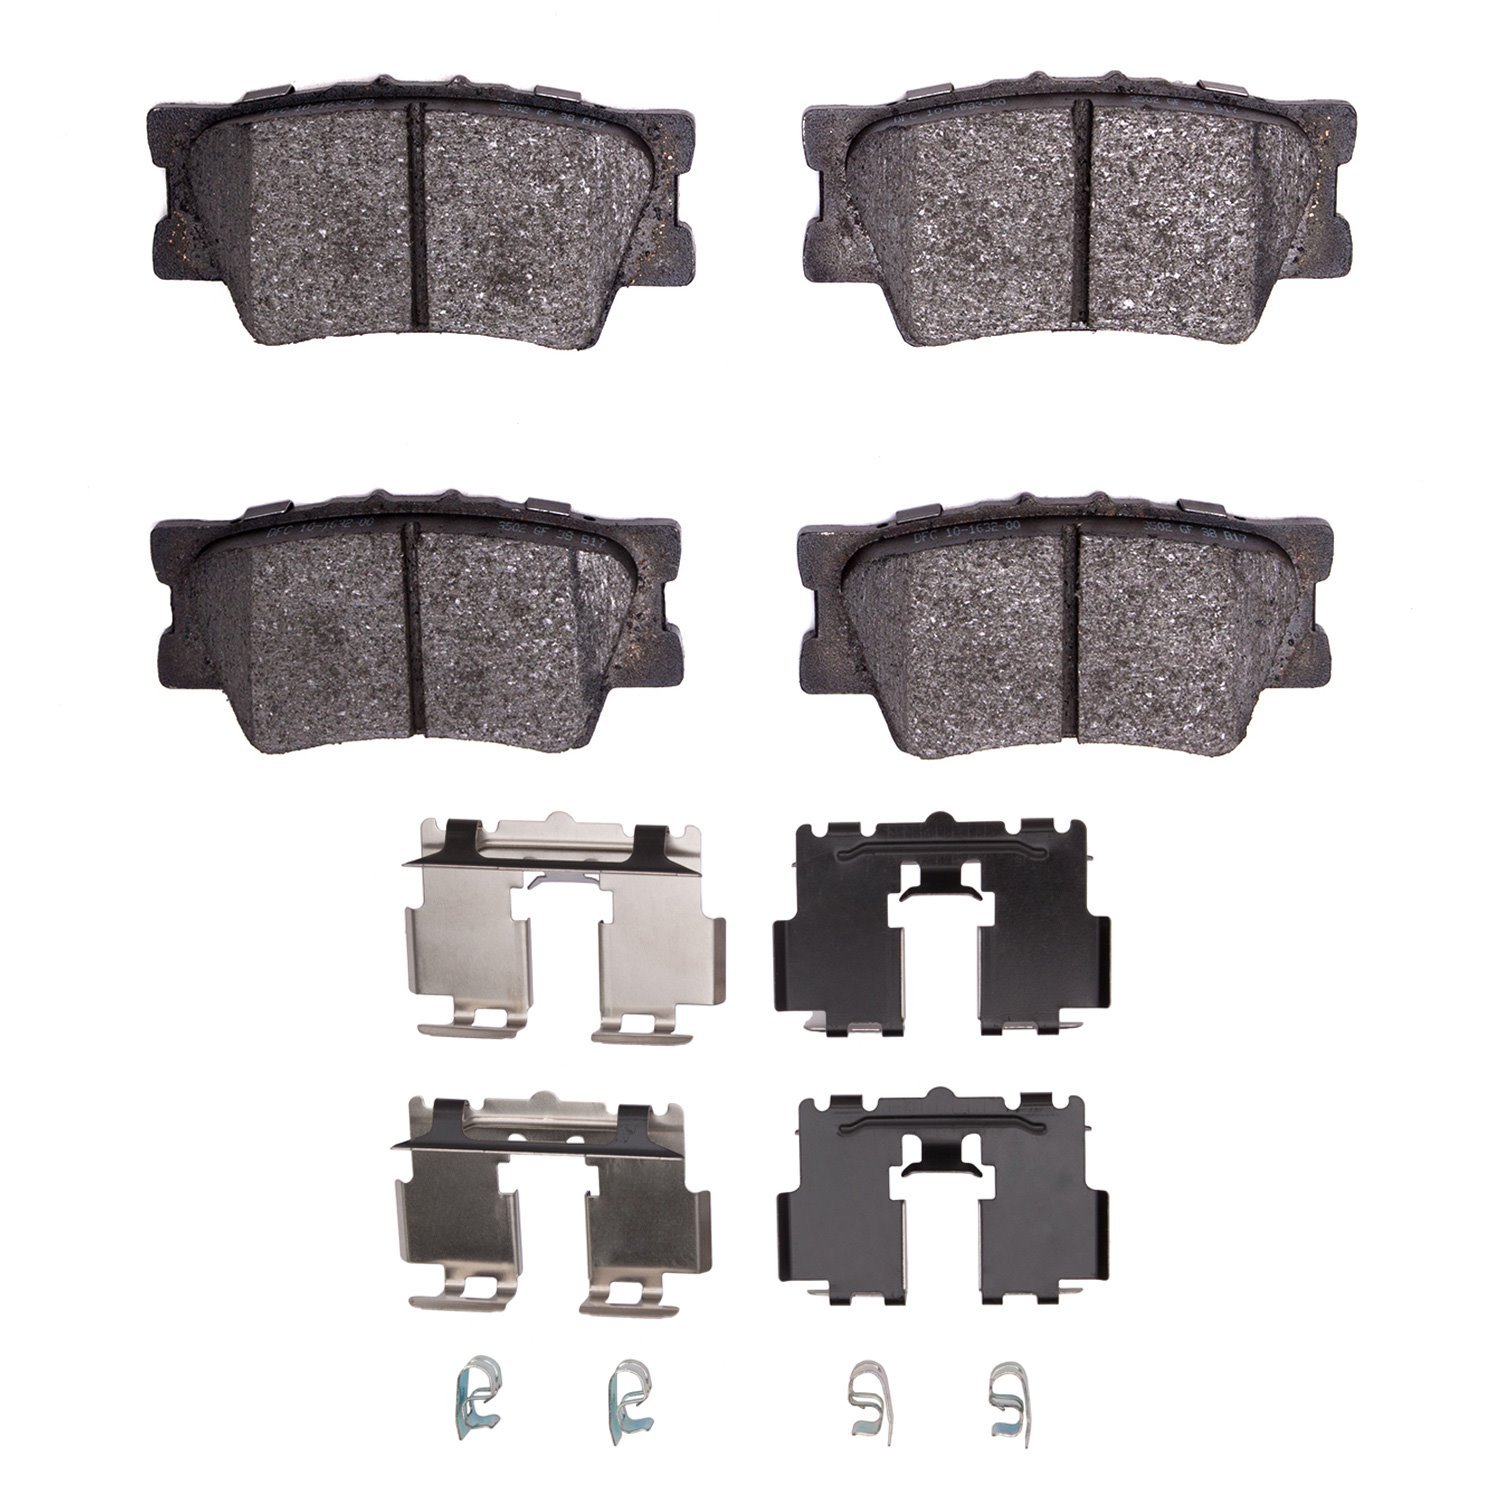 1551-1632-02 5000 Advanced Ceramic Brake Pads & Hardware Kit, Fits Select Multiple Makes/Models, Position: Rear